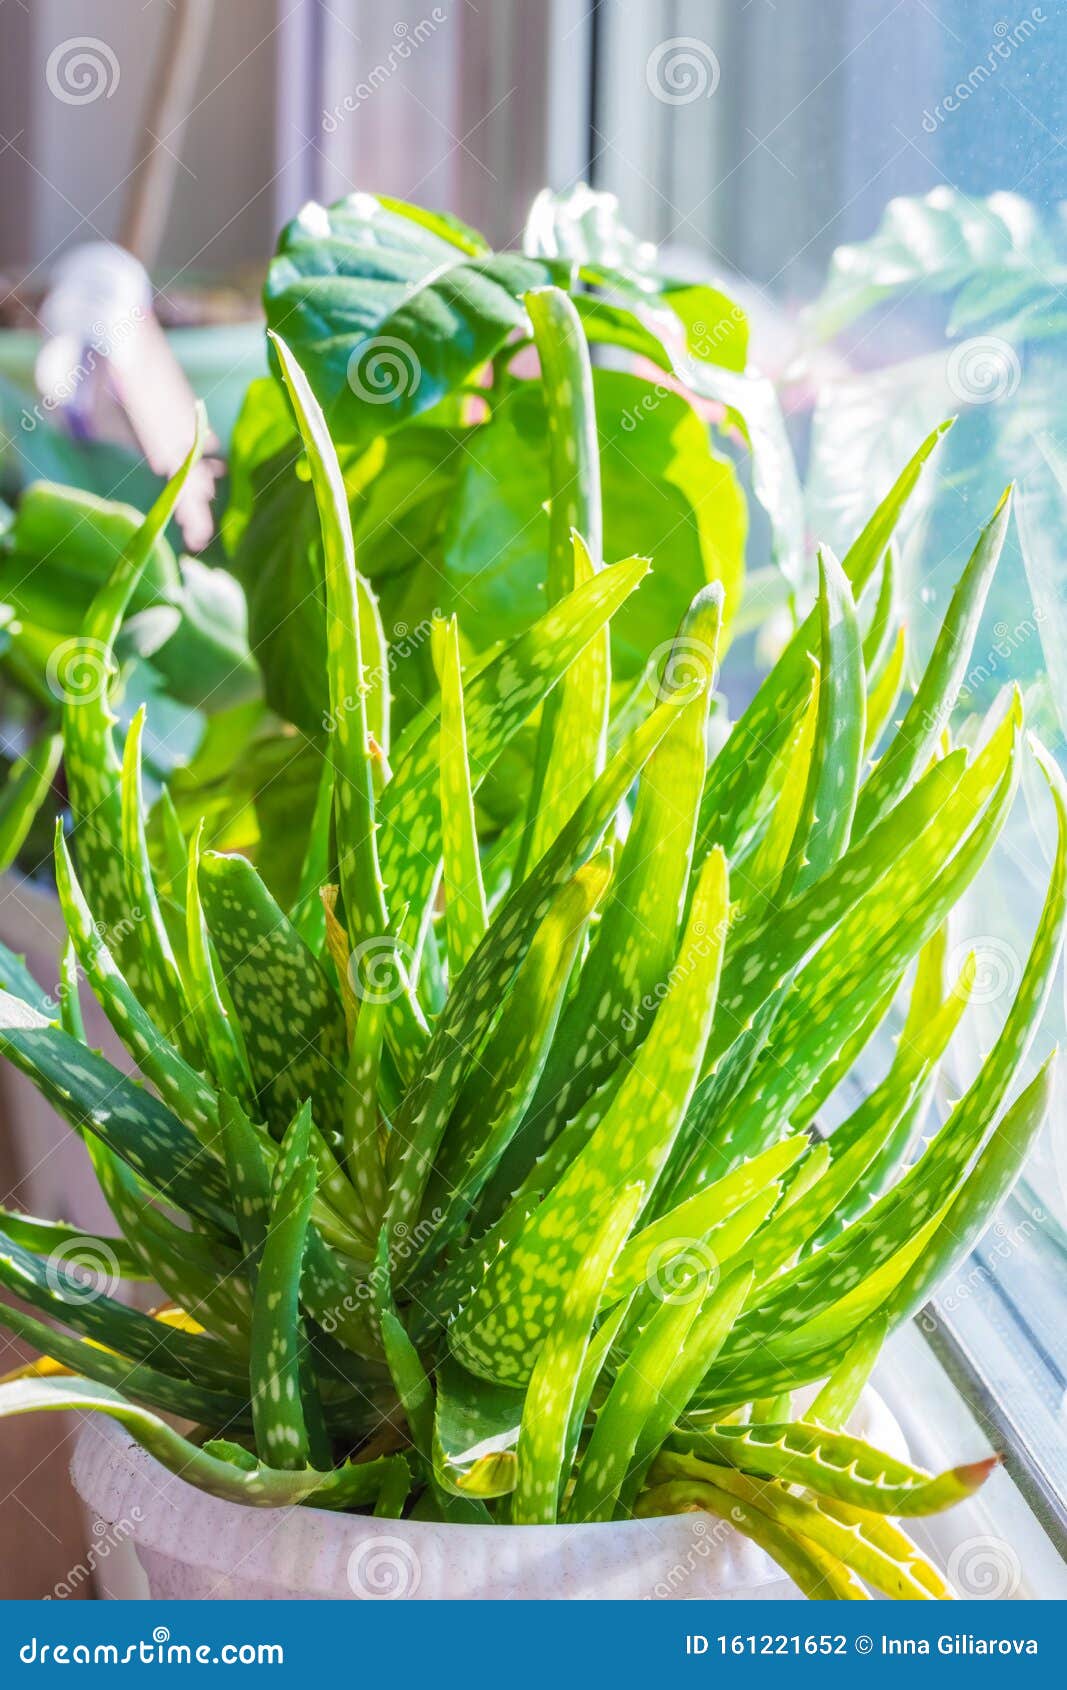 Aloe Vera Plant In A Pot Stock Photo Image Of Cure 161221652